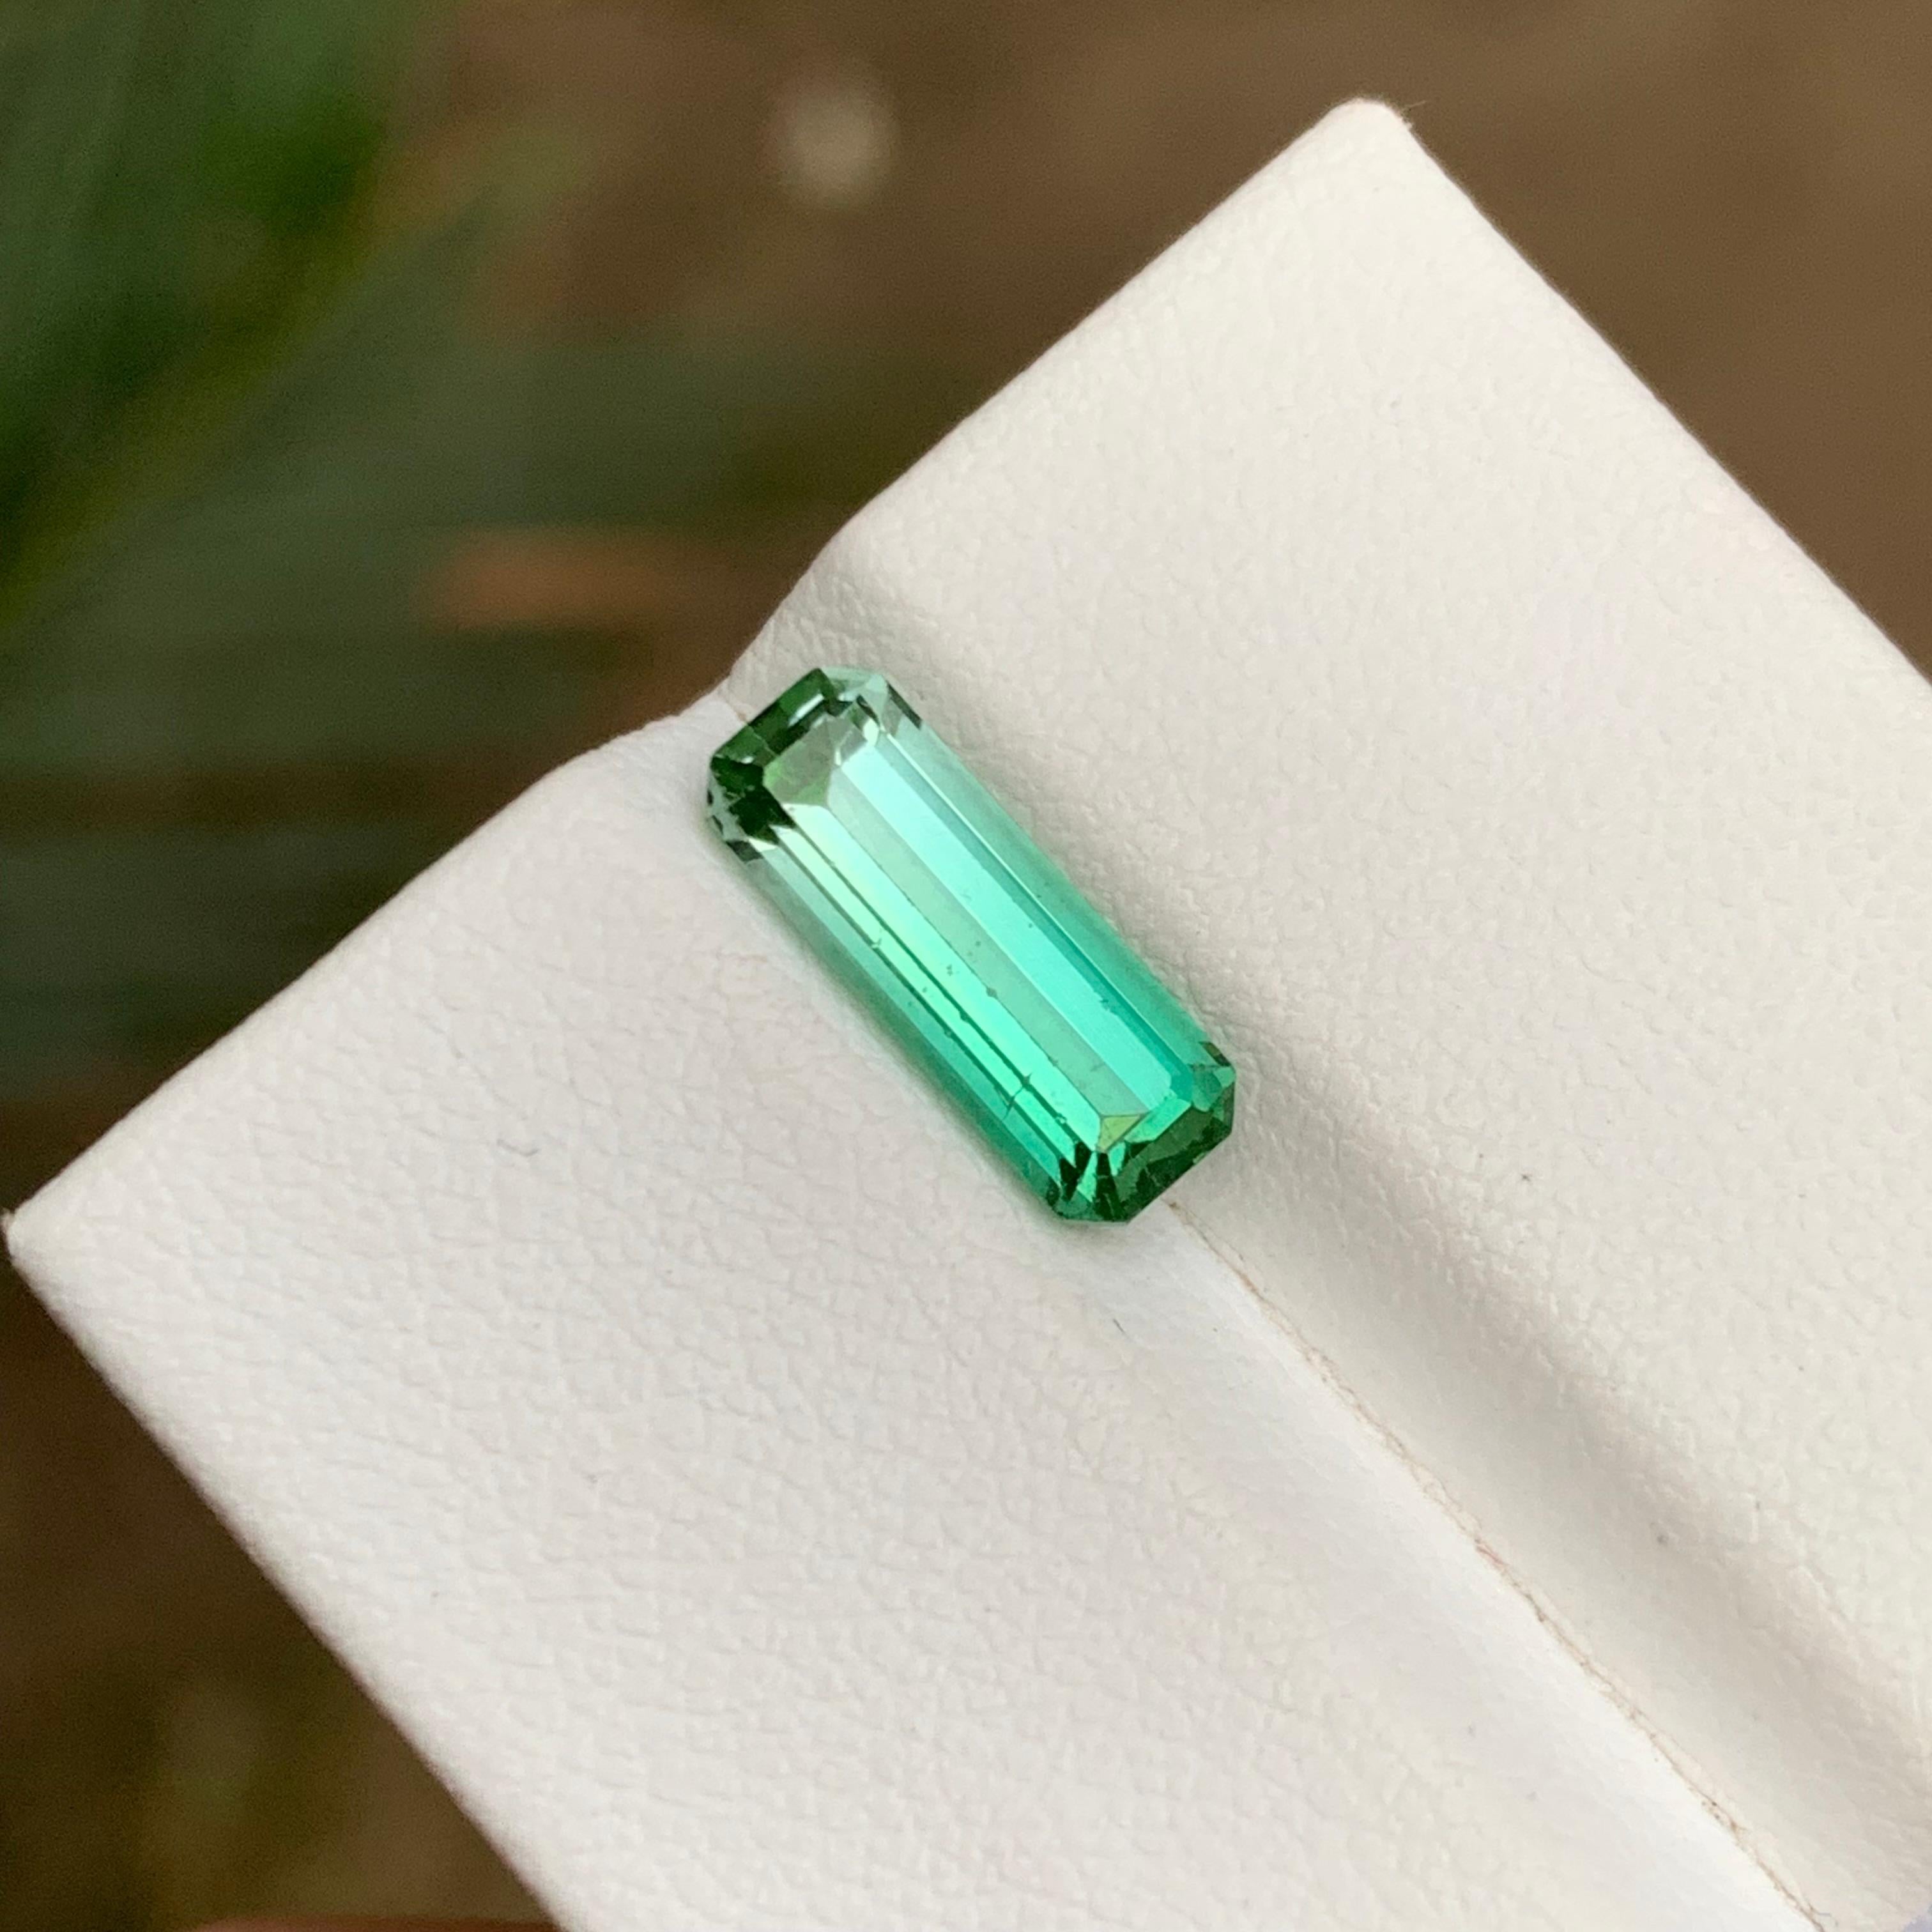 Rare Vivid Bluish Green Bicolor Tourmaline Gemstone 2.25 Ct Emerald Cut for Ring For Sale 2